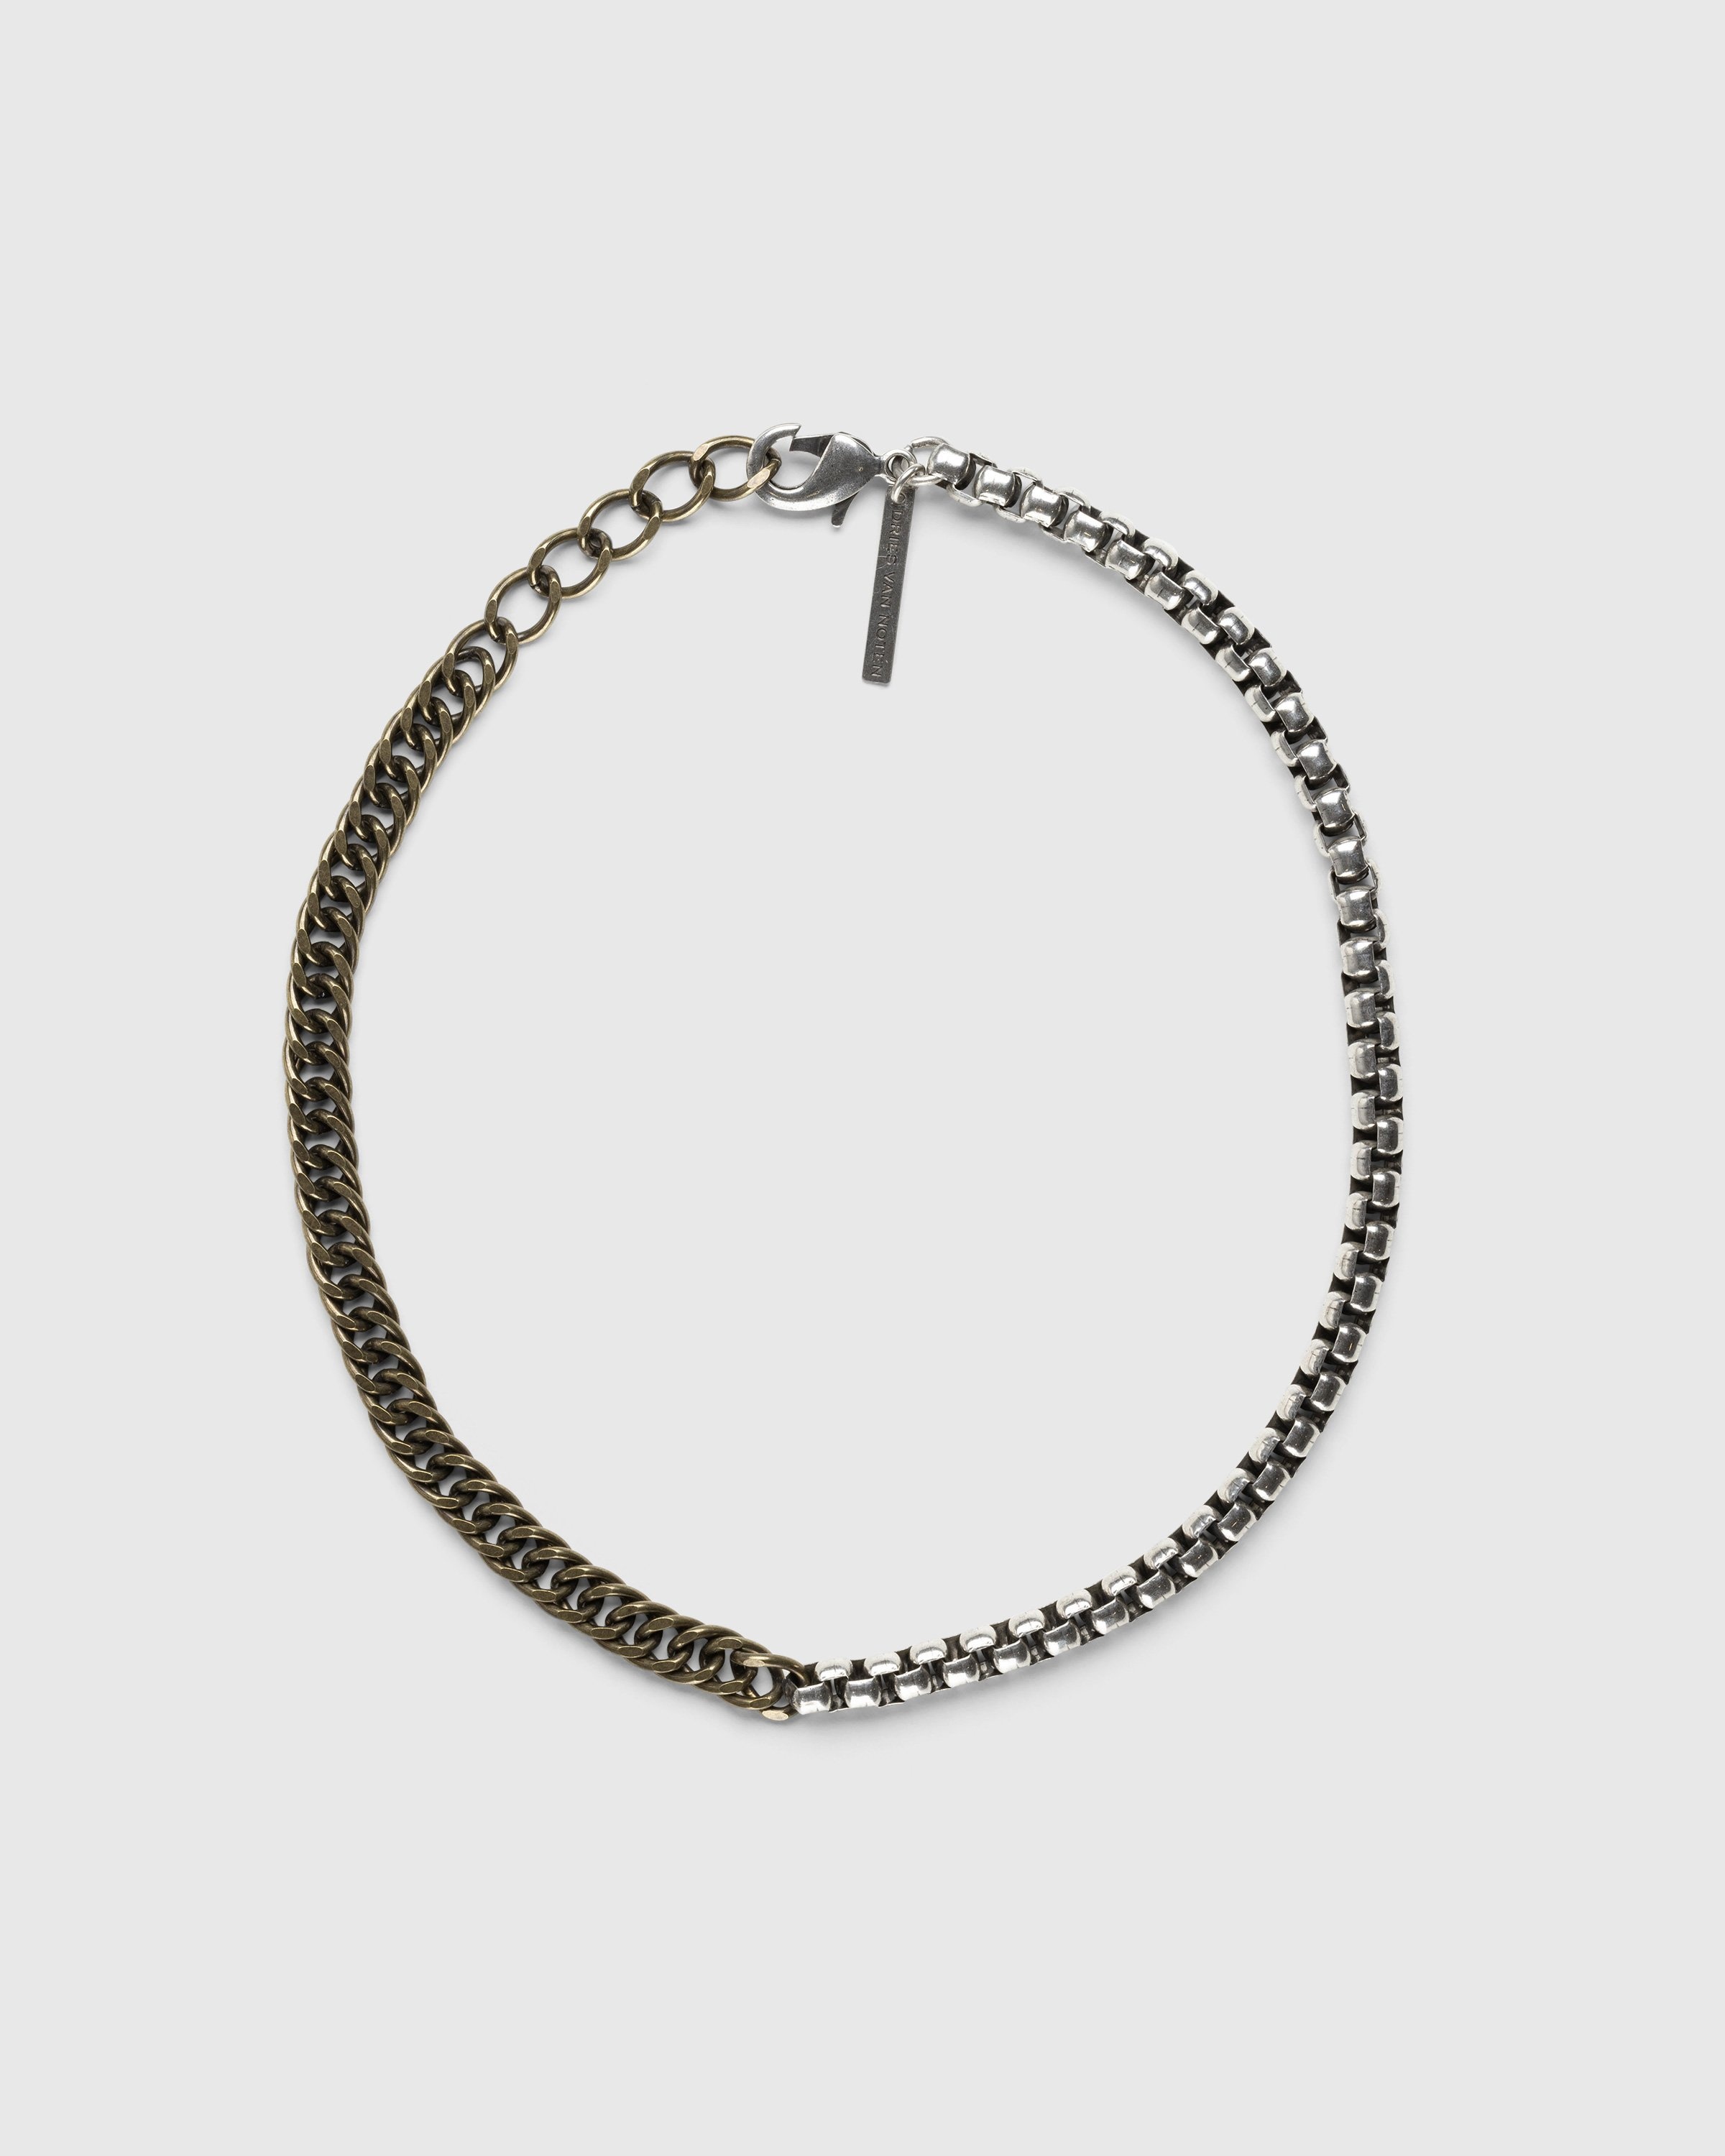 Dries van Noten – M232-206 Necklace Black - Jewelry - Silver - Image 1